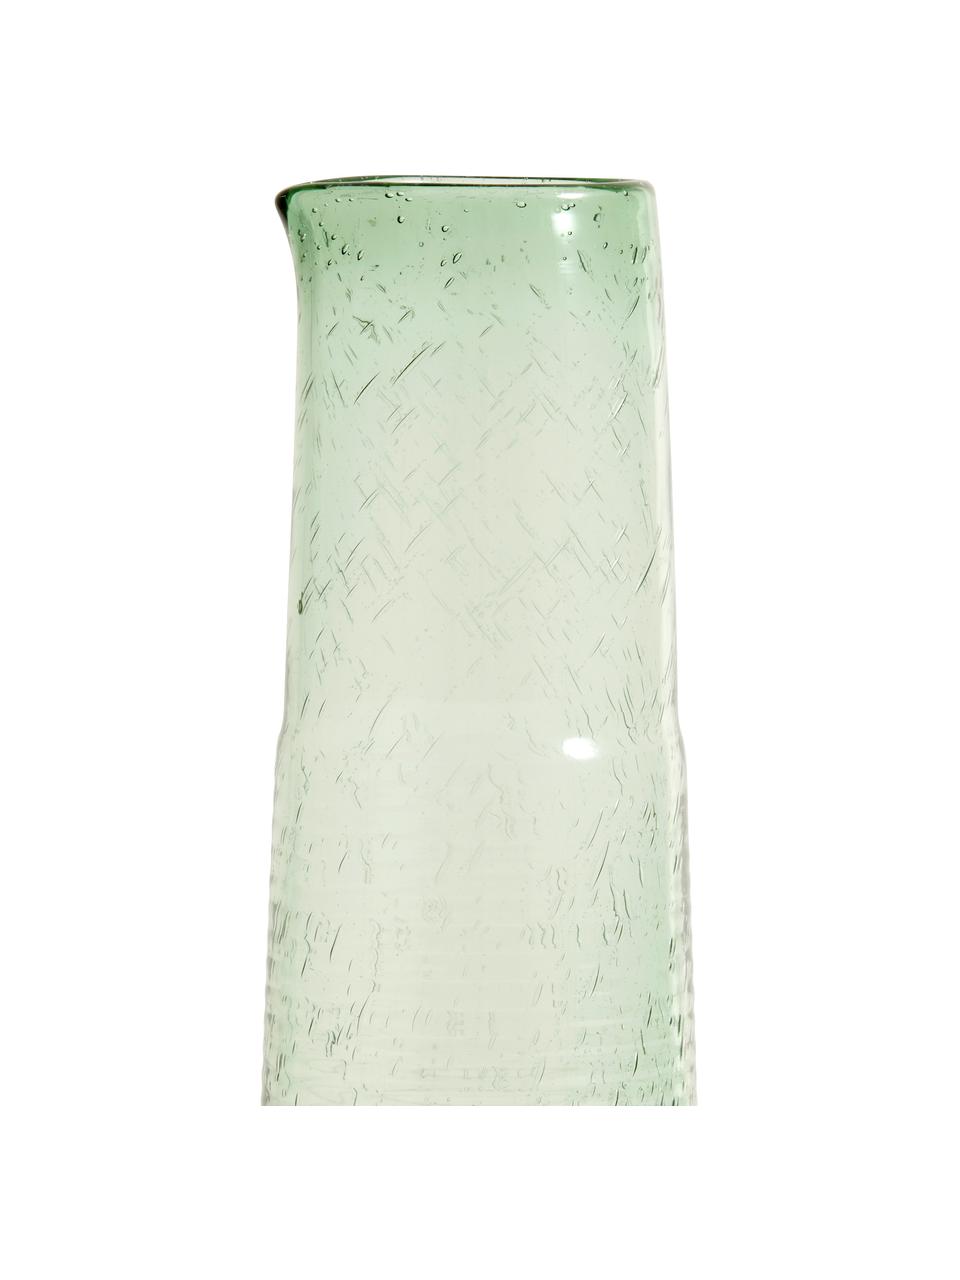 Jarra de vidrio soplado artesanalmente Greenie, 1.3 L, Vidrio reciclado, Verde, Ø 8 x Al 30 cm, 1.3 L